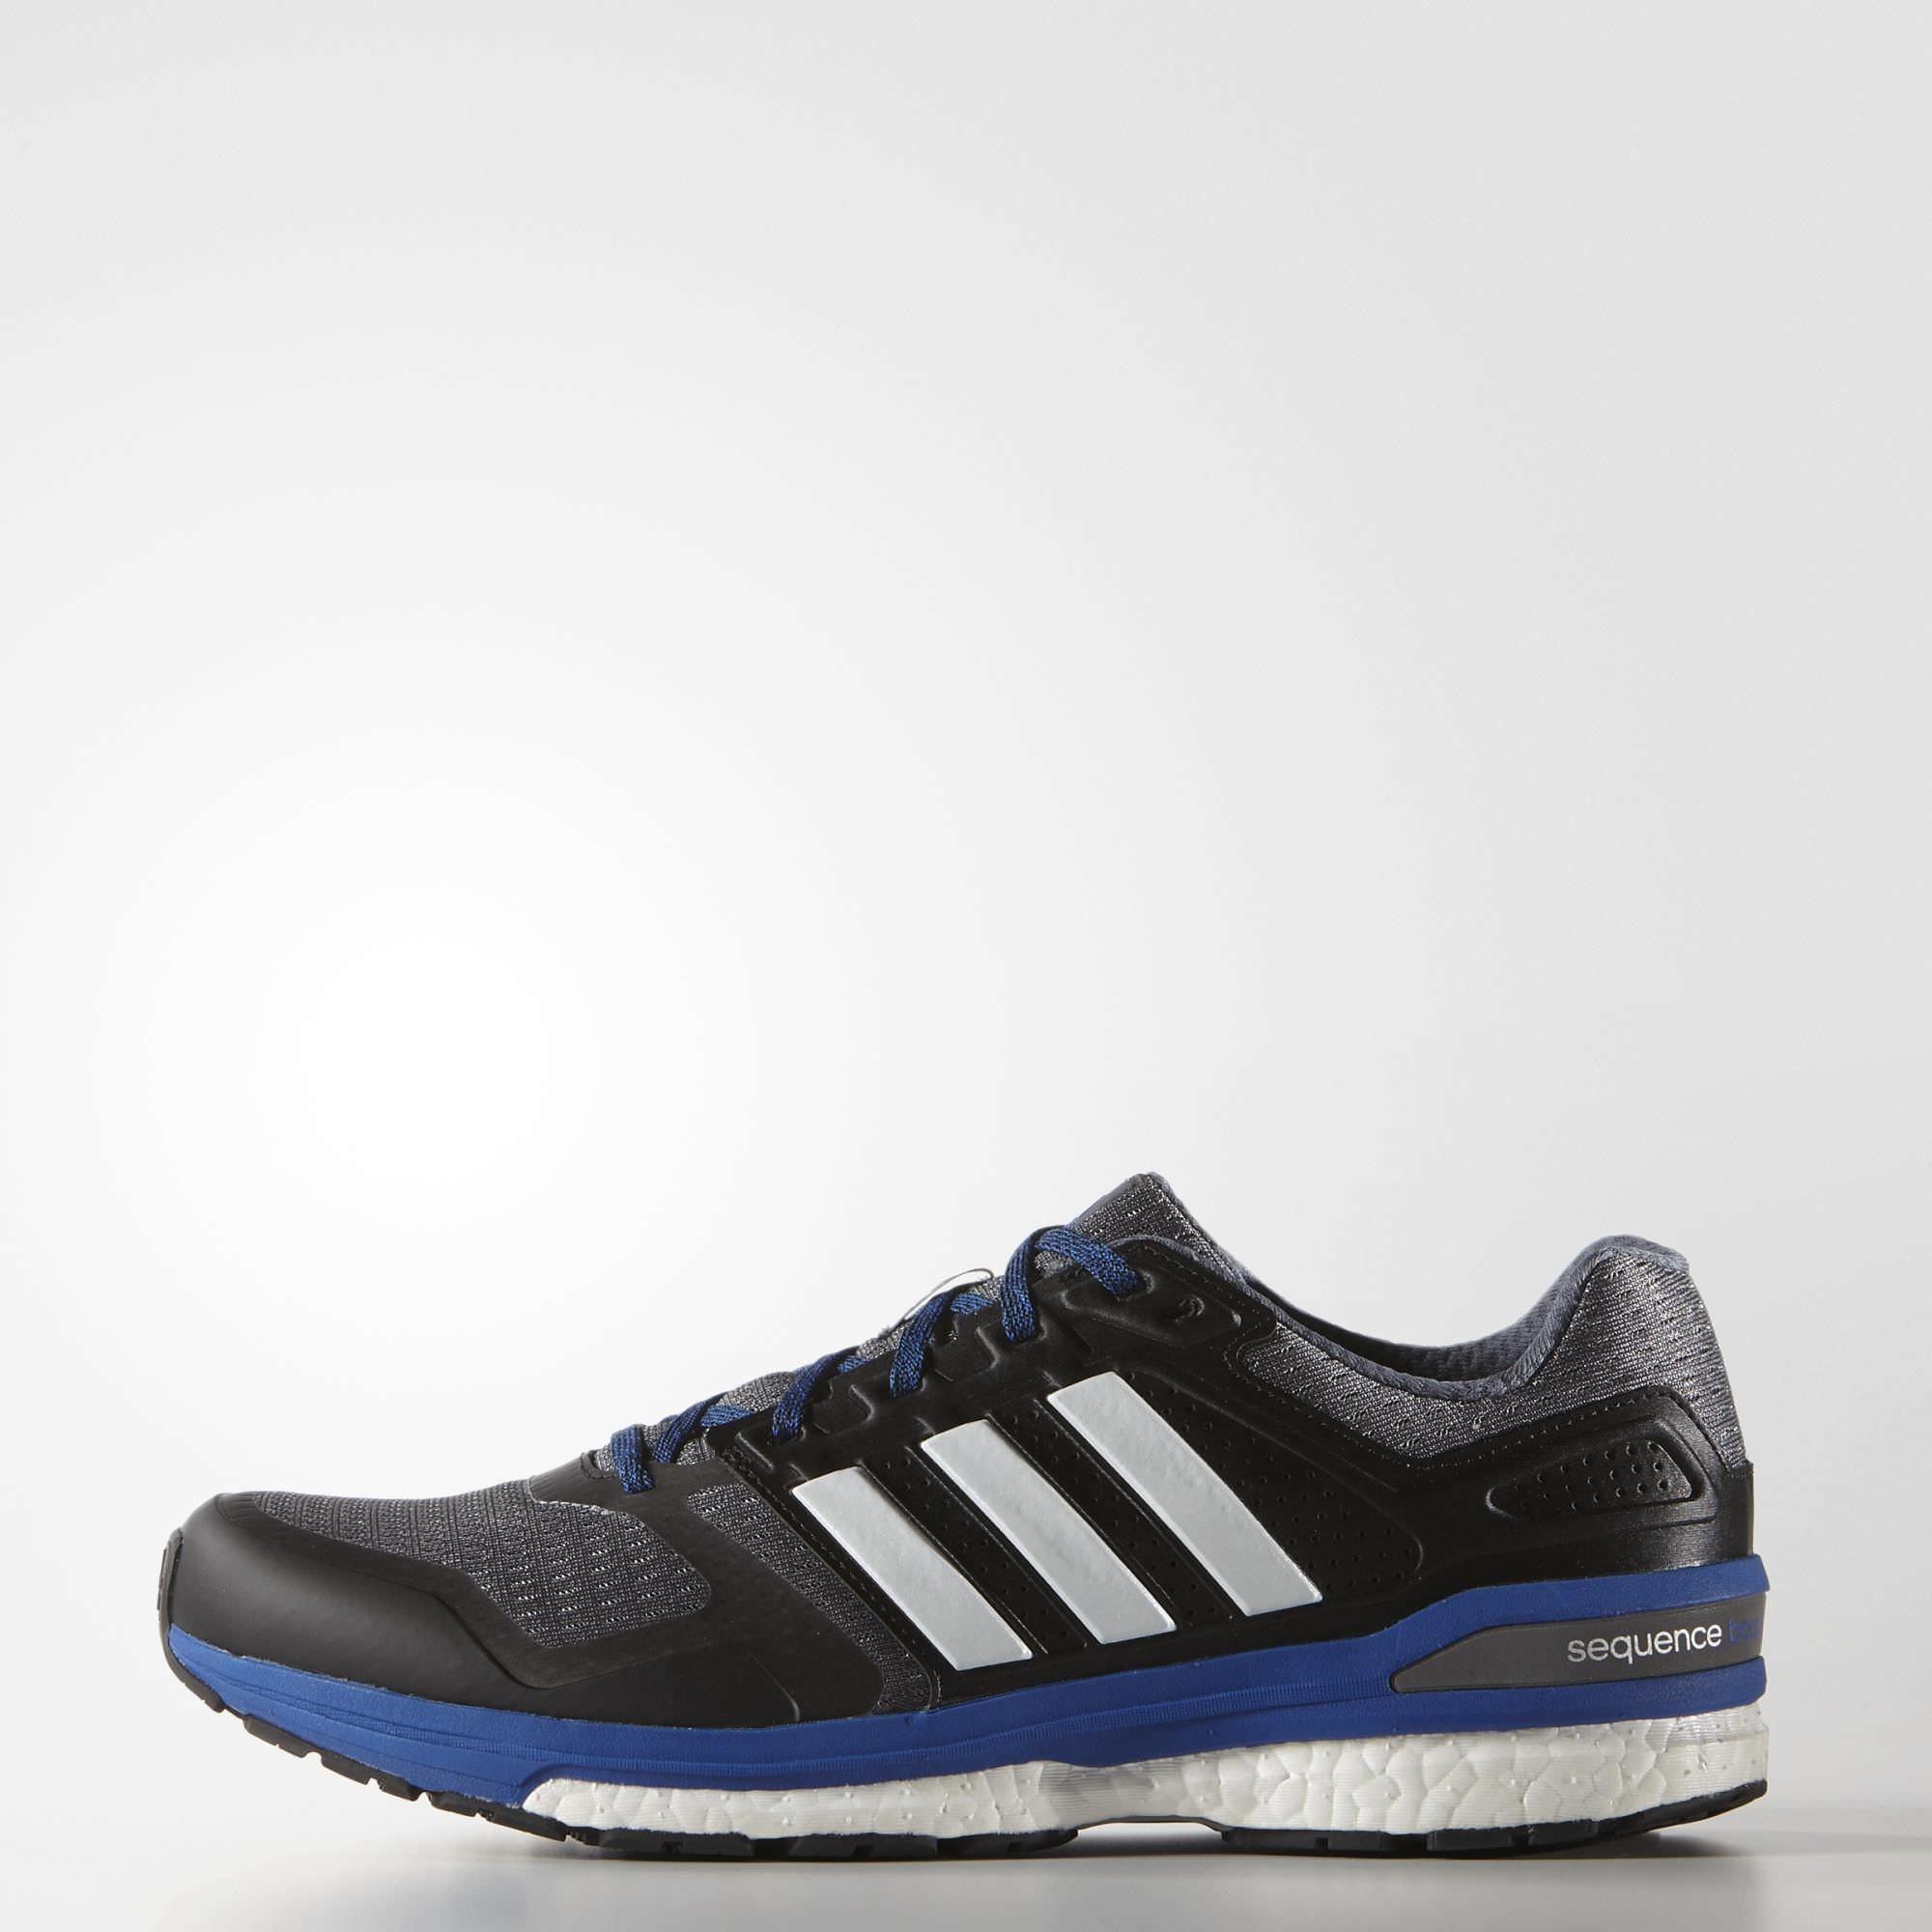 Adidas Mens Supernova Sequence Running Shoes - Onix - Tennisnuts.com